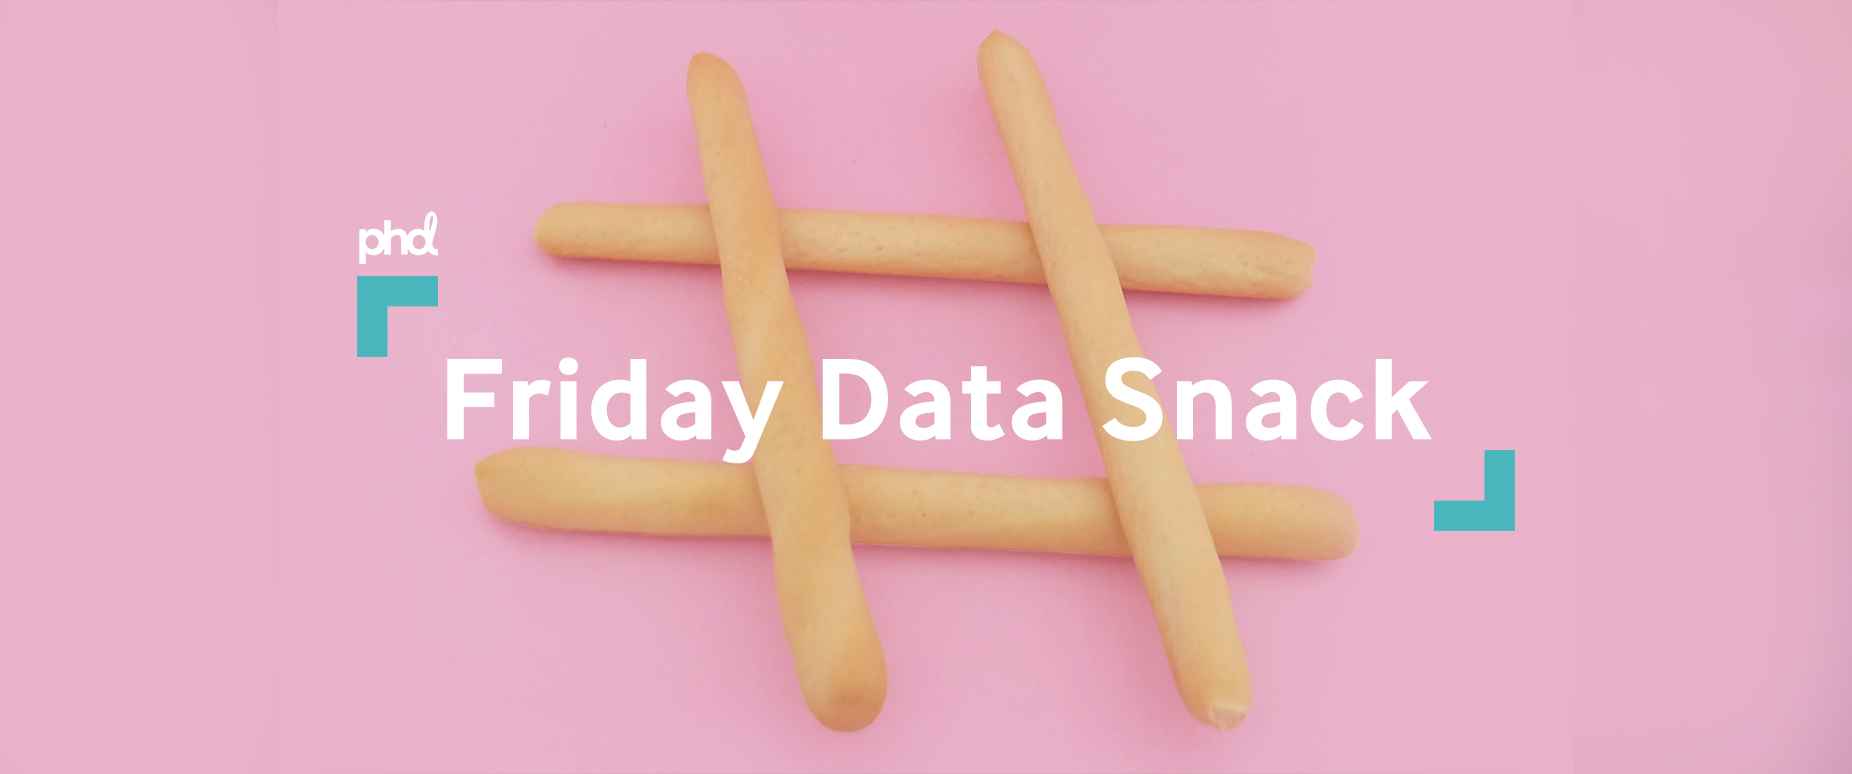 PHD CHINA Friday Data Snack